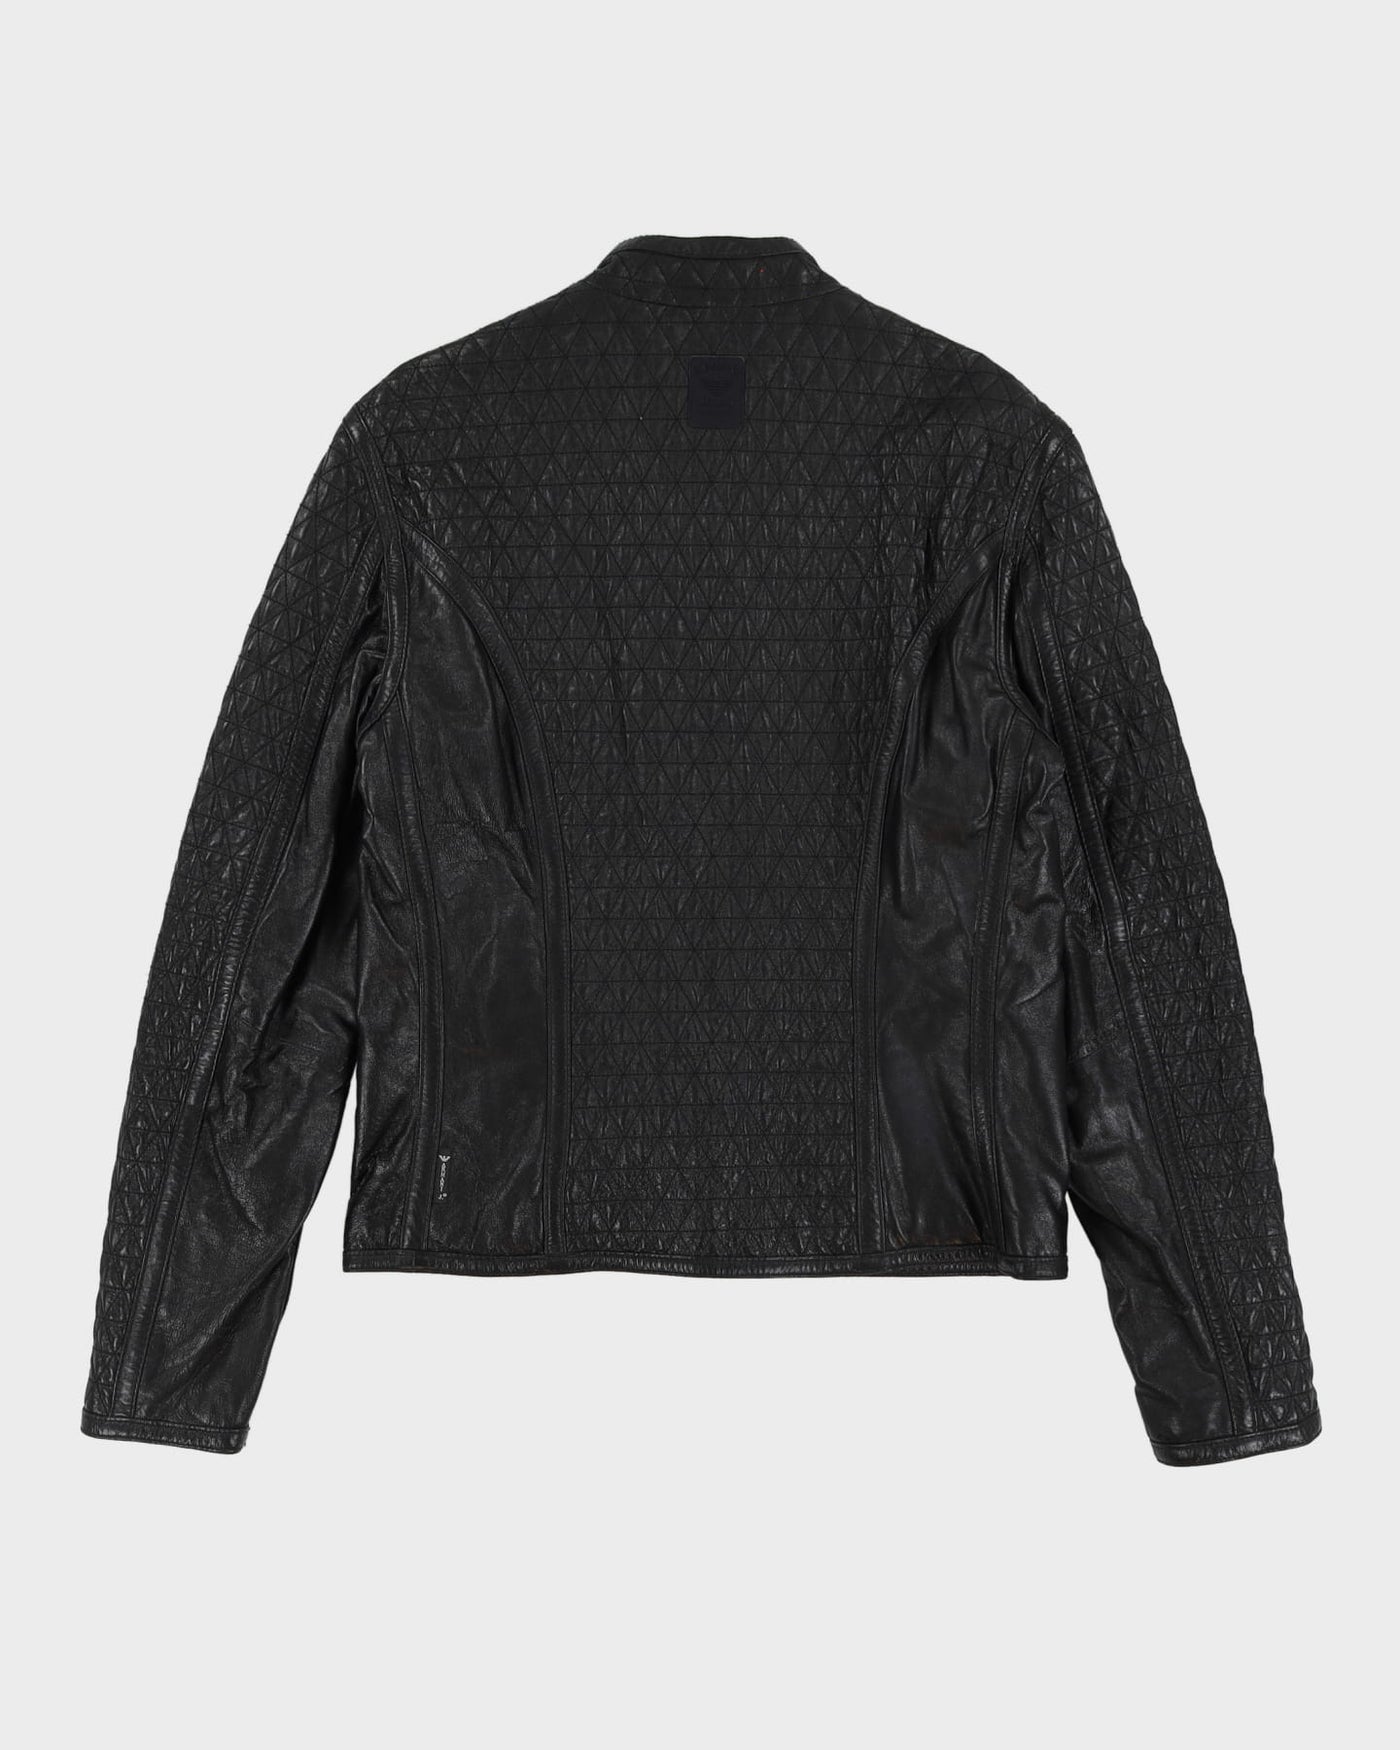 Armani Jeans Black Full-Zip Leather Jacket - M